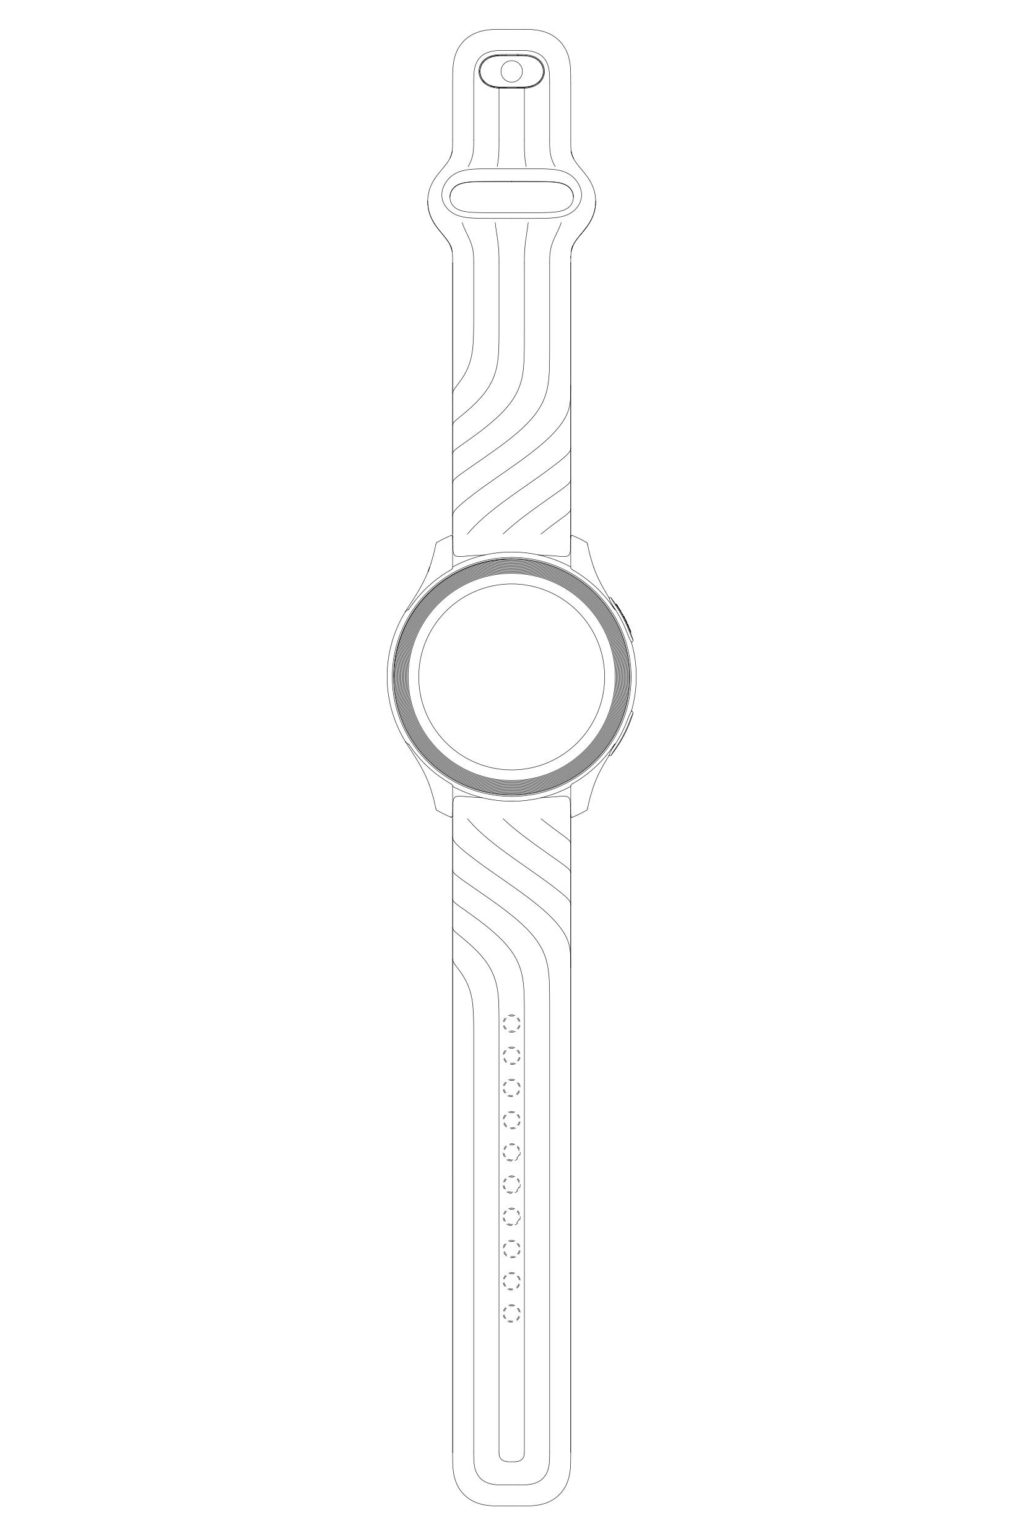 oneplus-watch-sport-patent-2-1024x1536.jpg